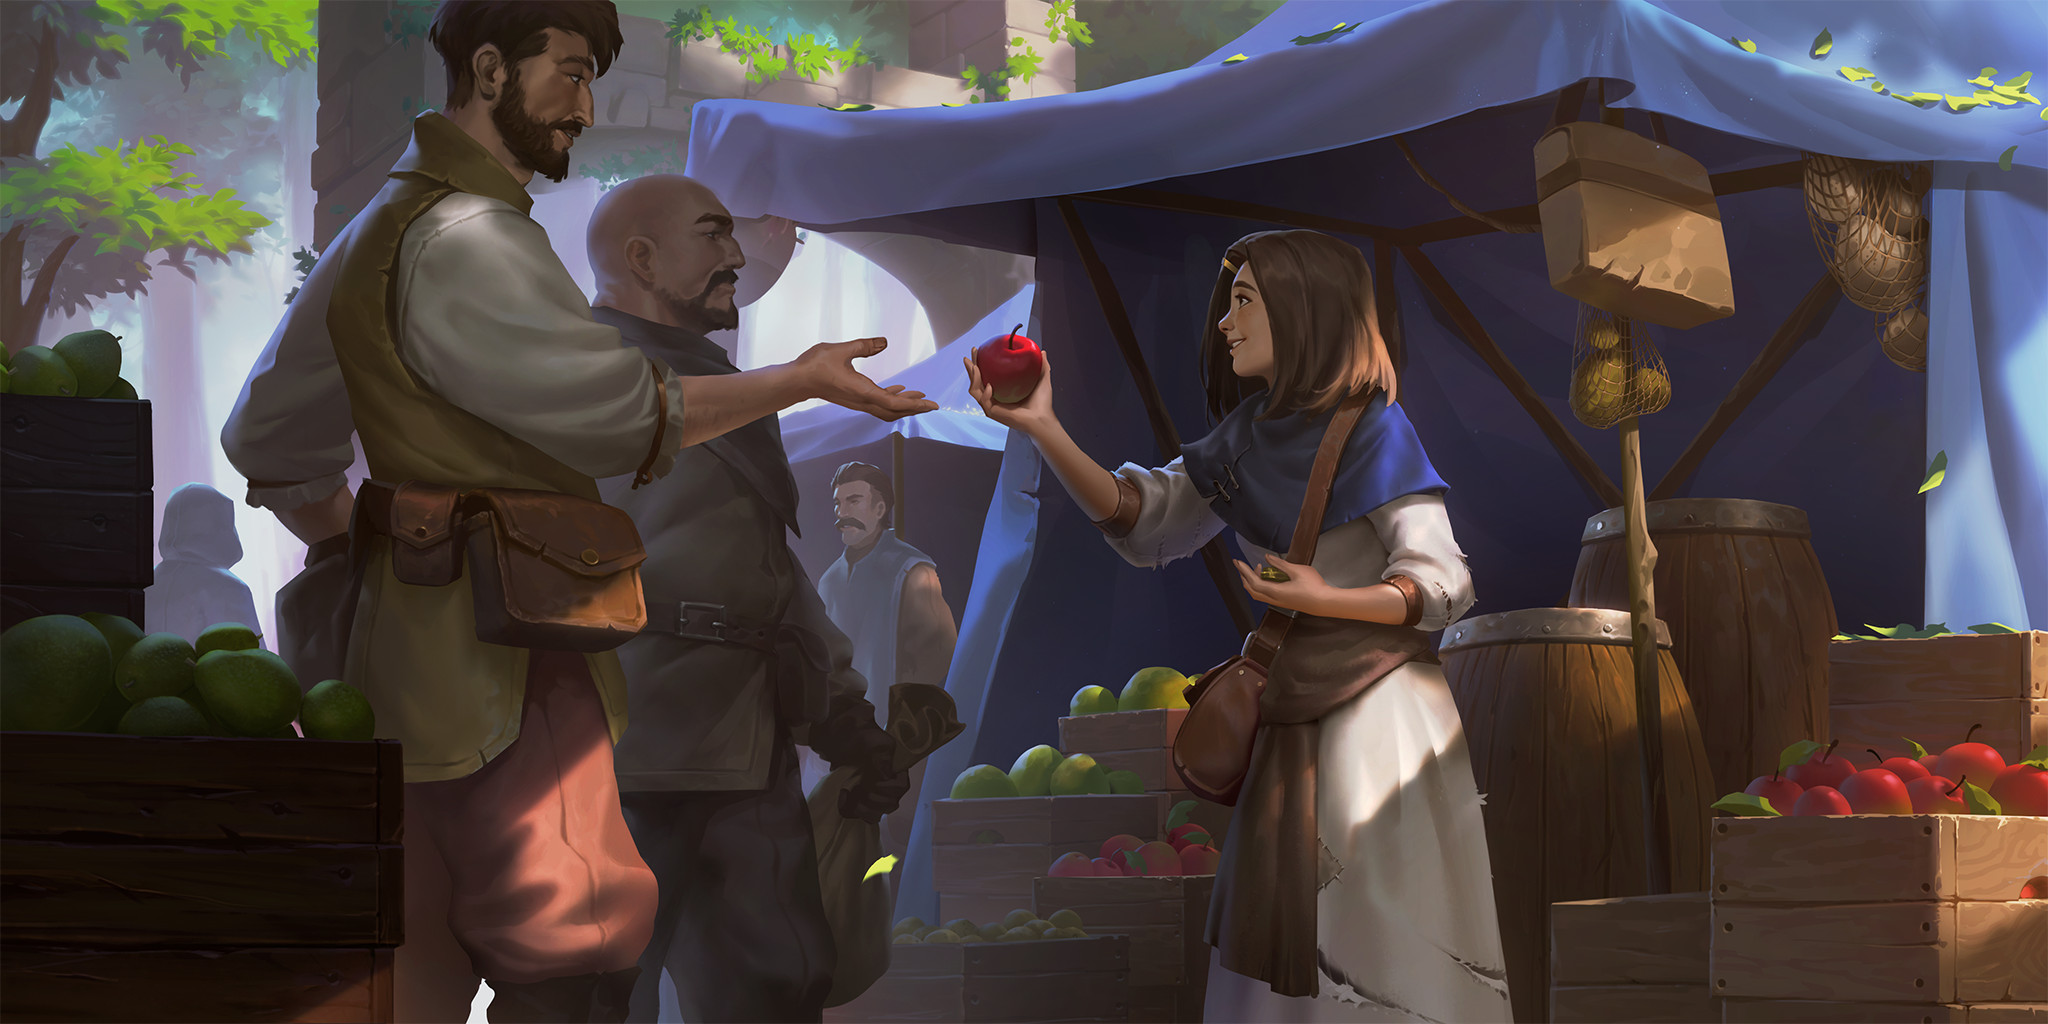 Fantasy Girl Fantasy City Legends Of Runeterra Fruit Market Town Apples Video Games Video Game Art 2048x1024